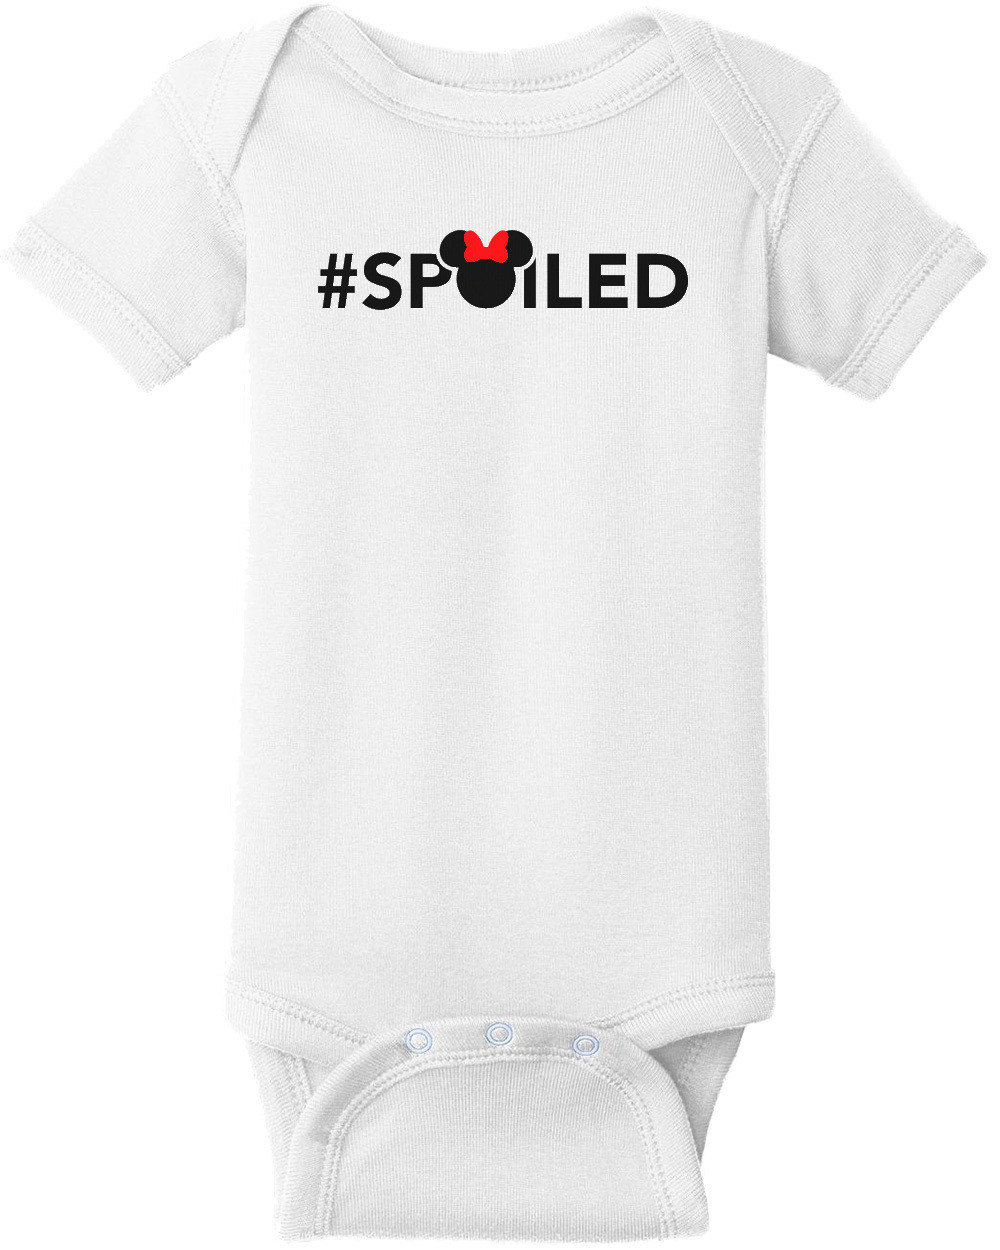 #Spoiled - funny disney kid's t-shirt